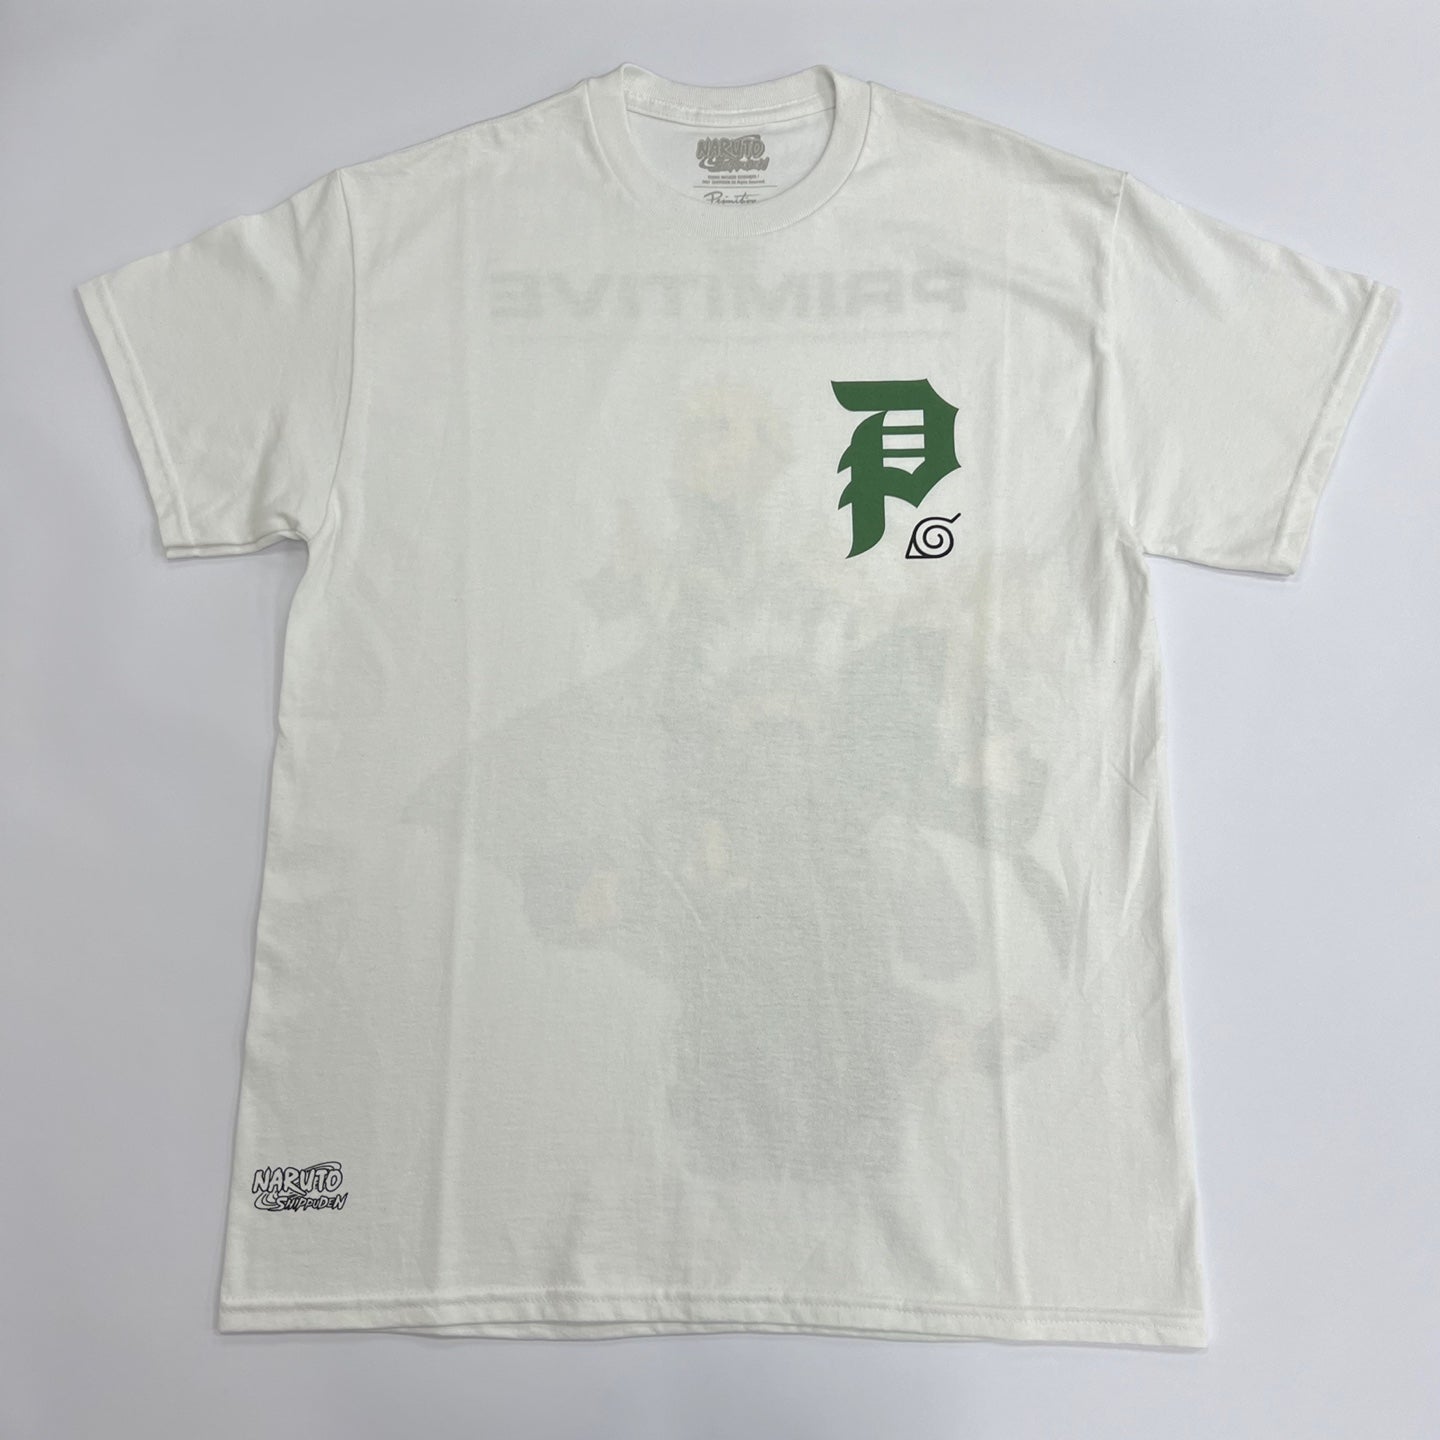 PRIMITIVE x Naruto Hokage T-Shirt - White